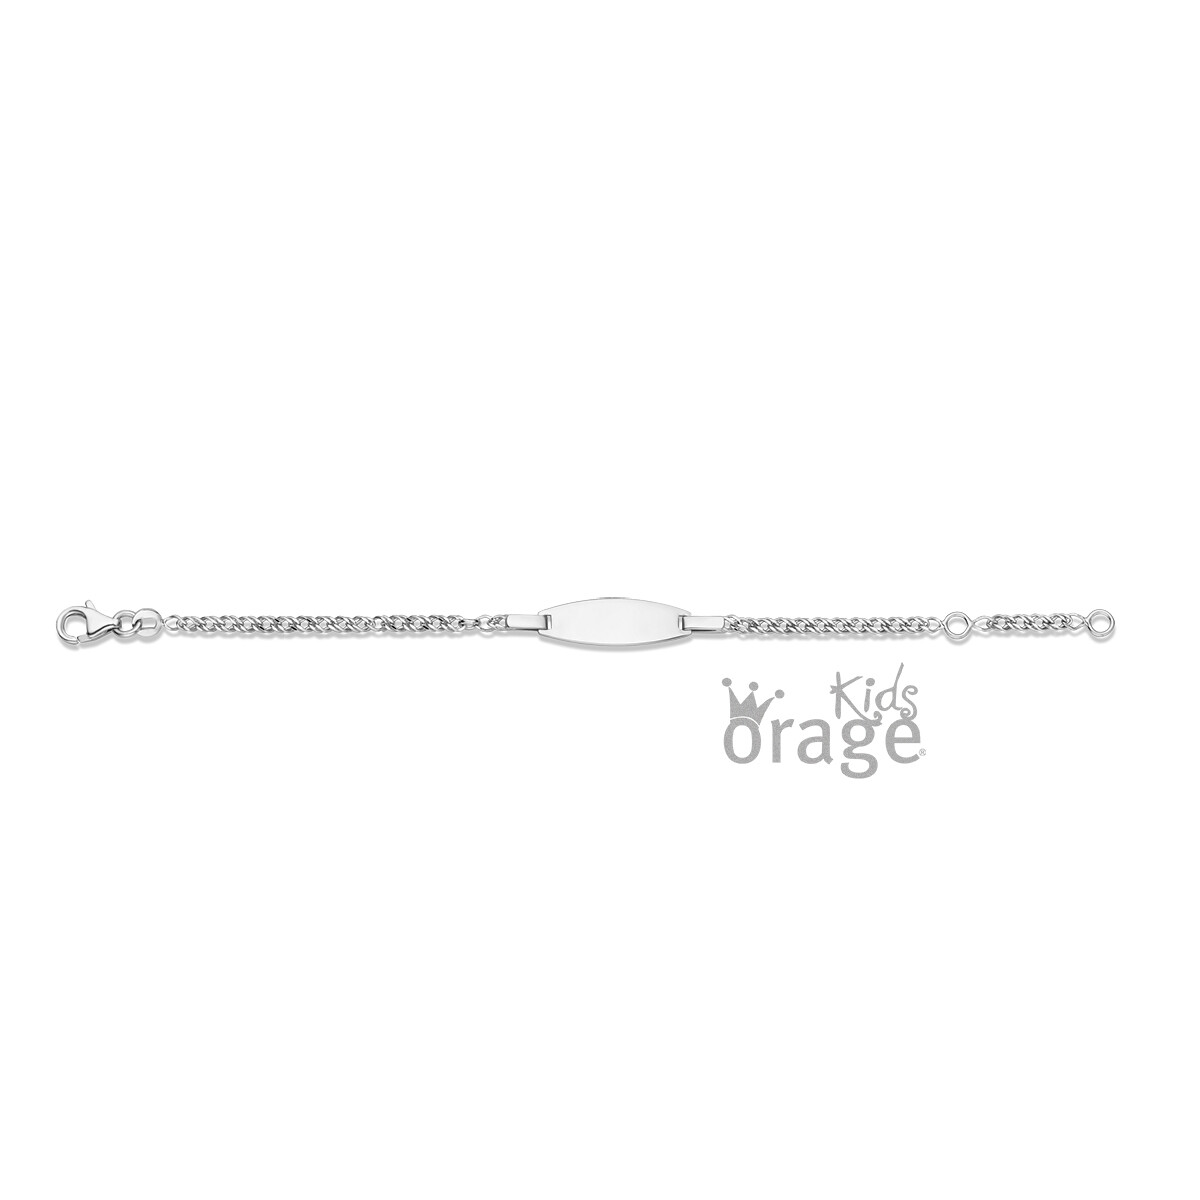 Bracelet Orage Kids K2373